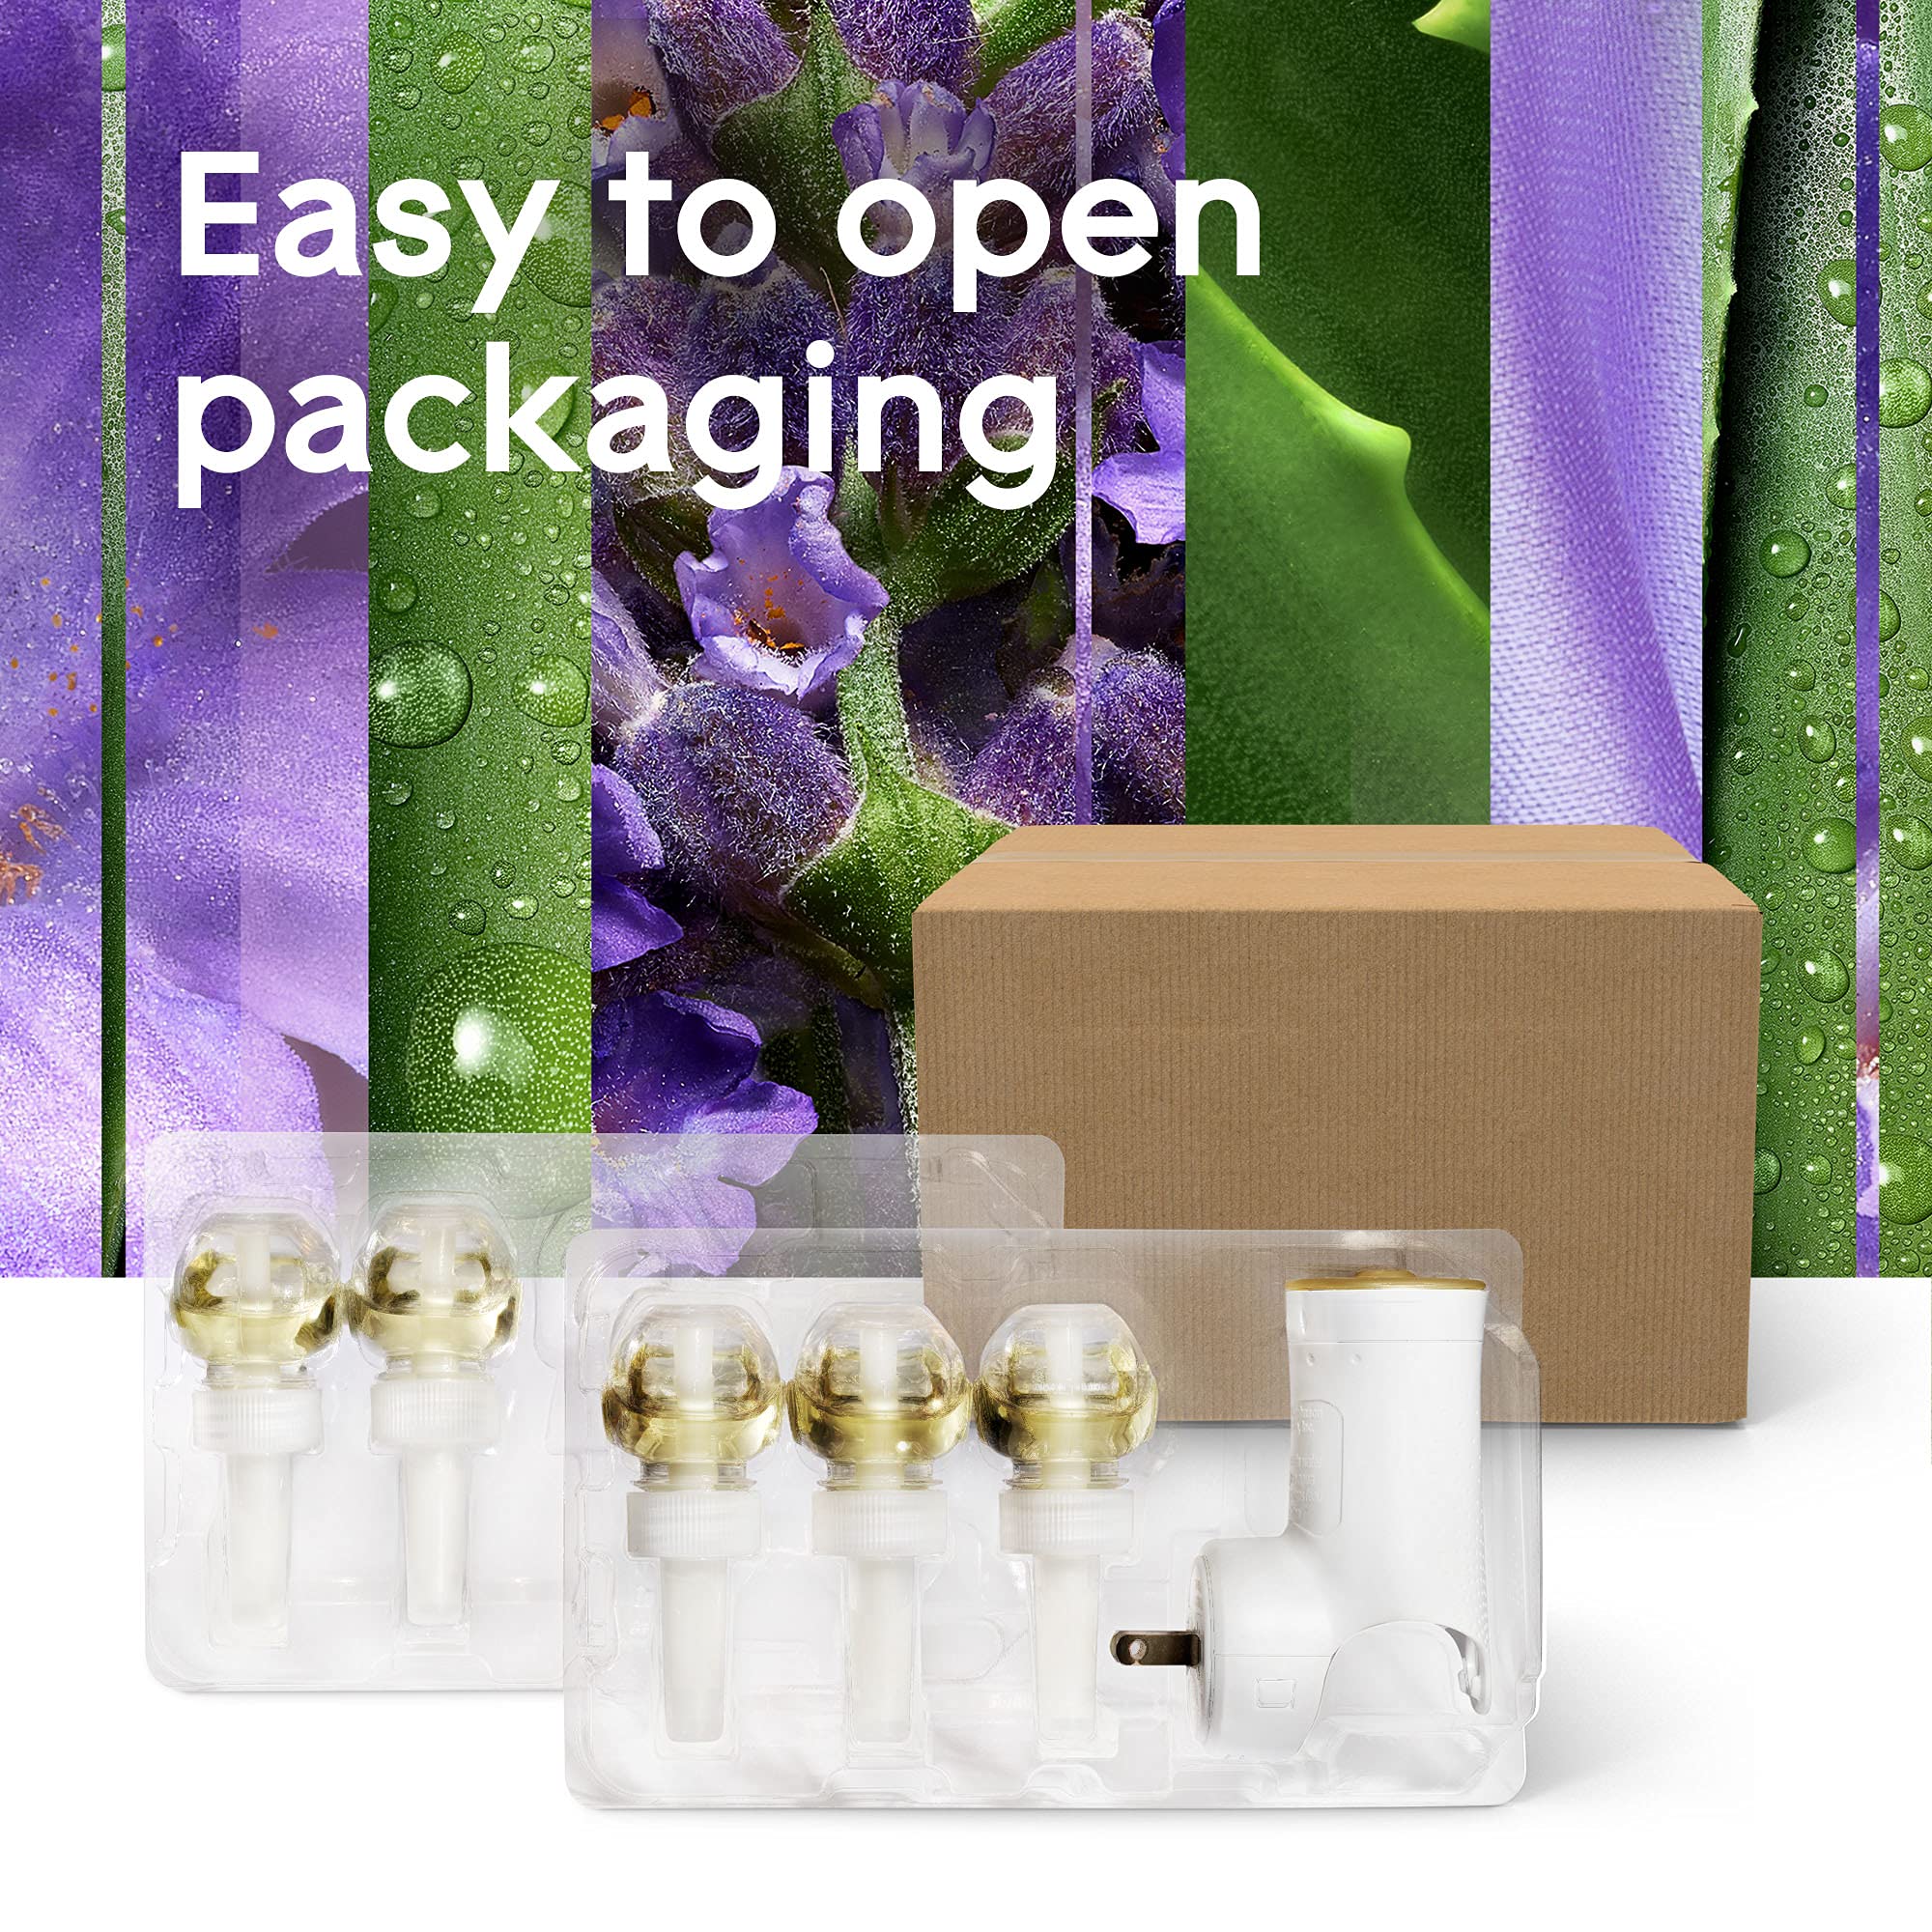 Glade PlugIns Refills Air Freshener Starter Kit, Scented and Essential Oils for Home and Bathroom, Lavender & Aloe, 3.35 Fl Oz, 1 Warmer + 5 Refills